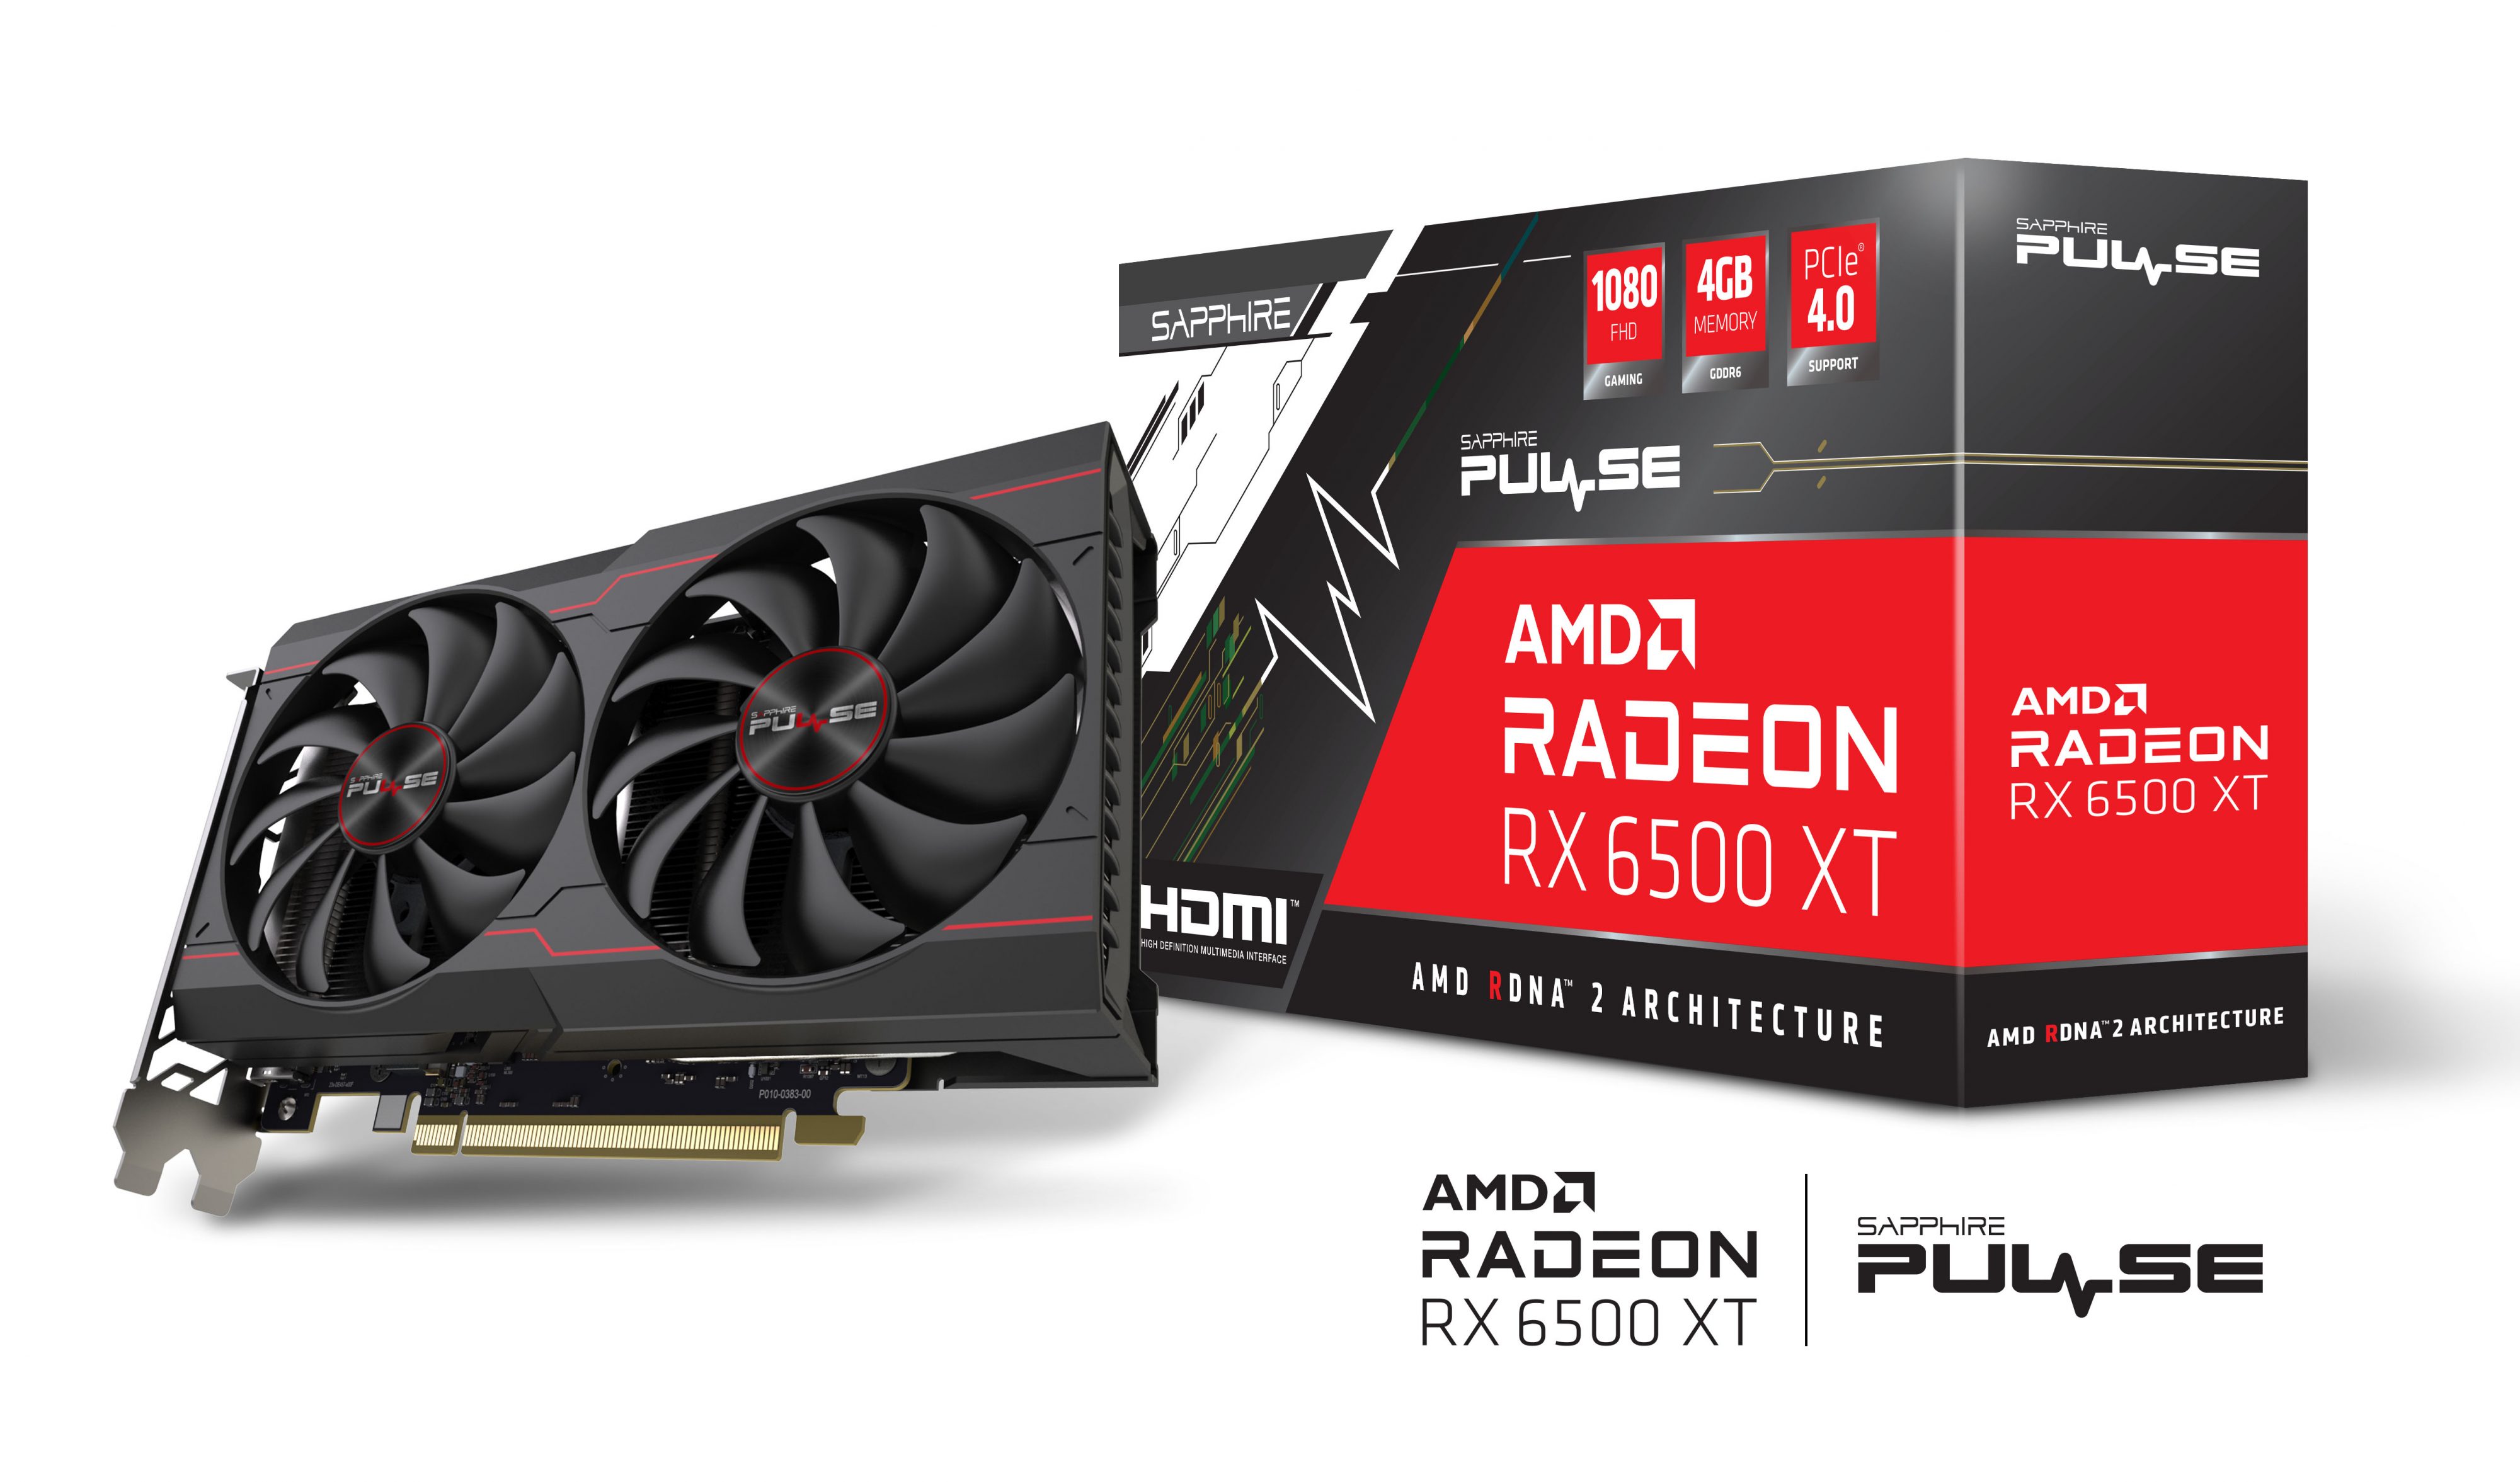 Asus Radeon RX 6600 XT 8GB Dual OC GPU w/Box, 1yr Warranty, Fast Ship!